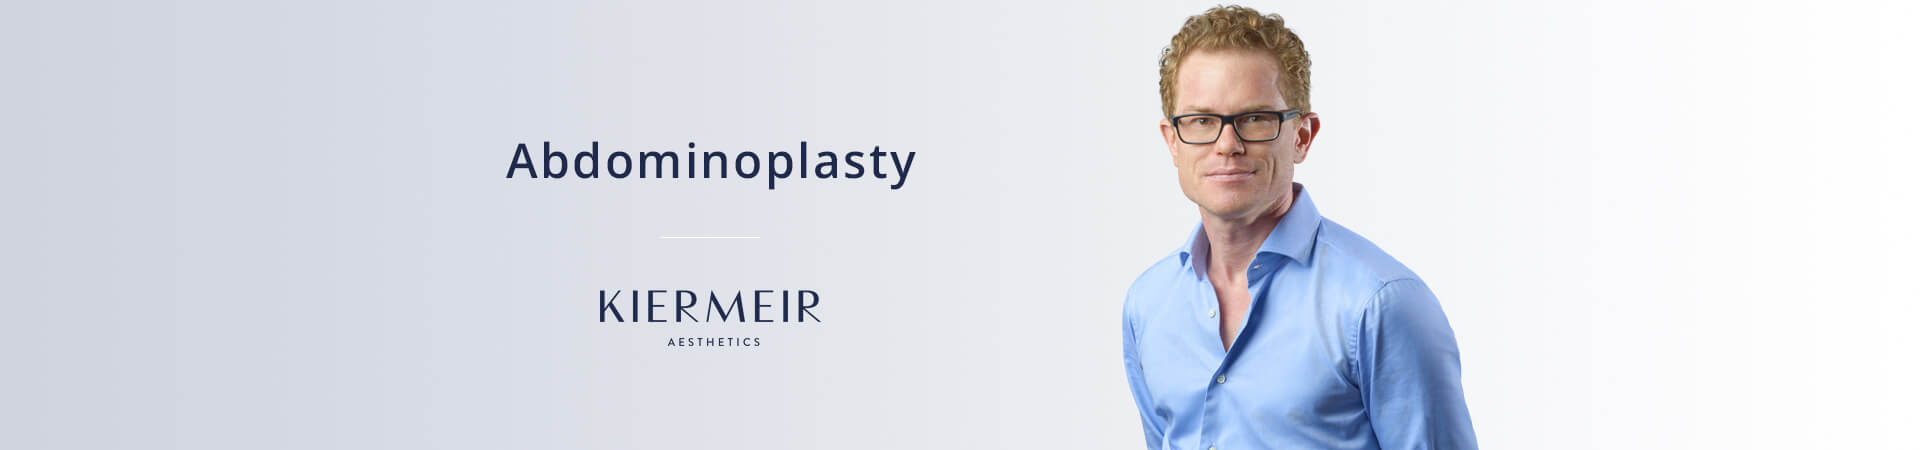 Abdominoplasty in Bern by Dr. Kiermeir 